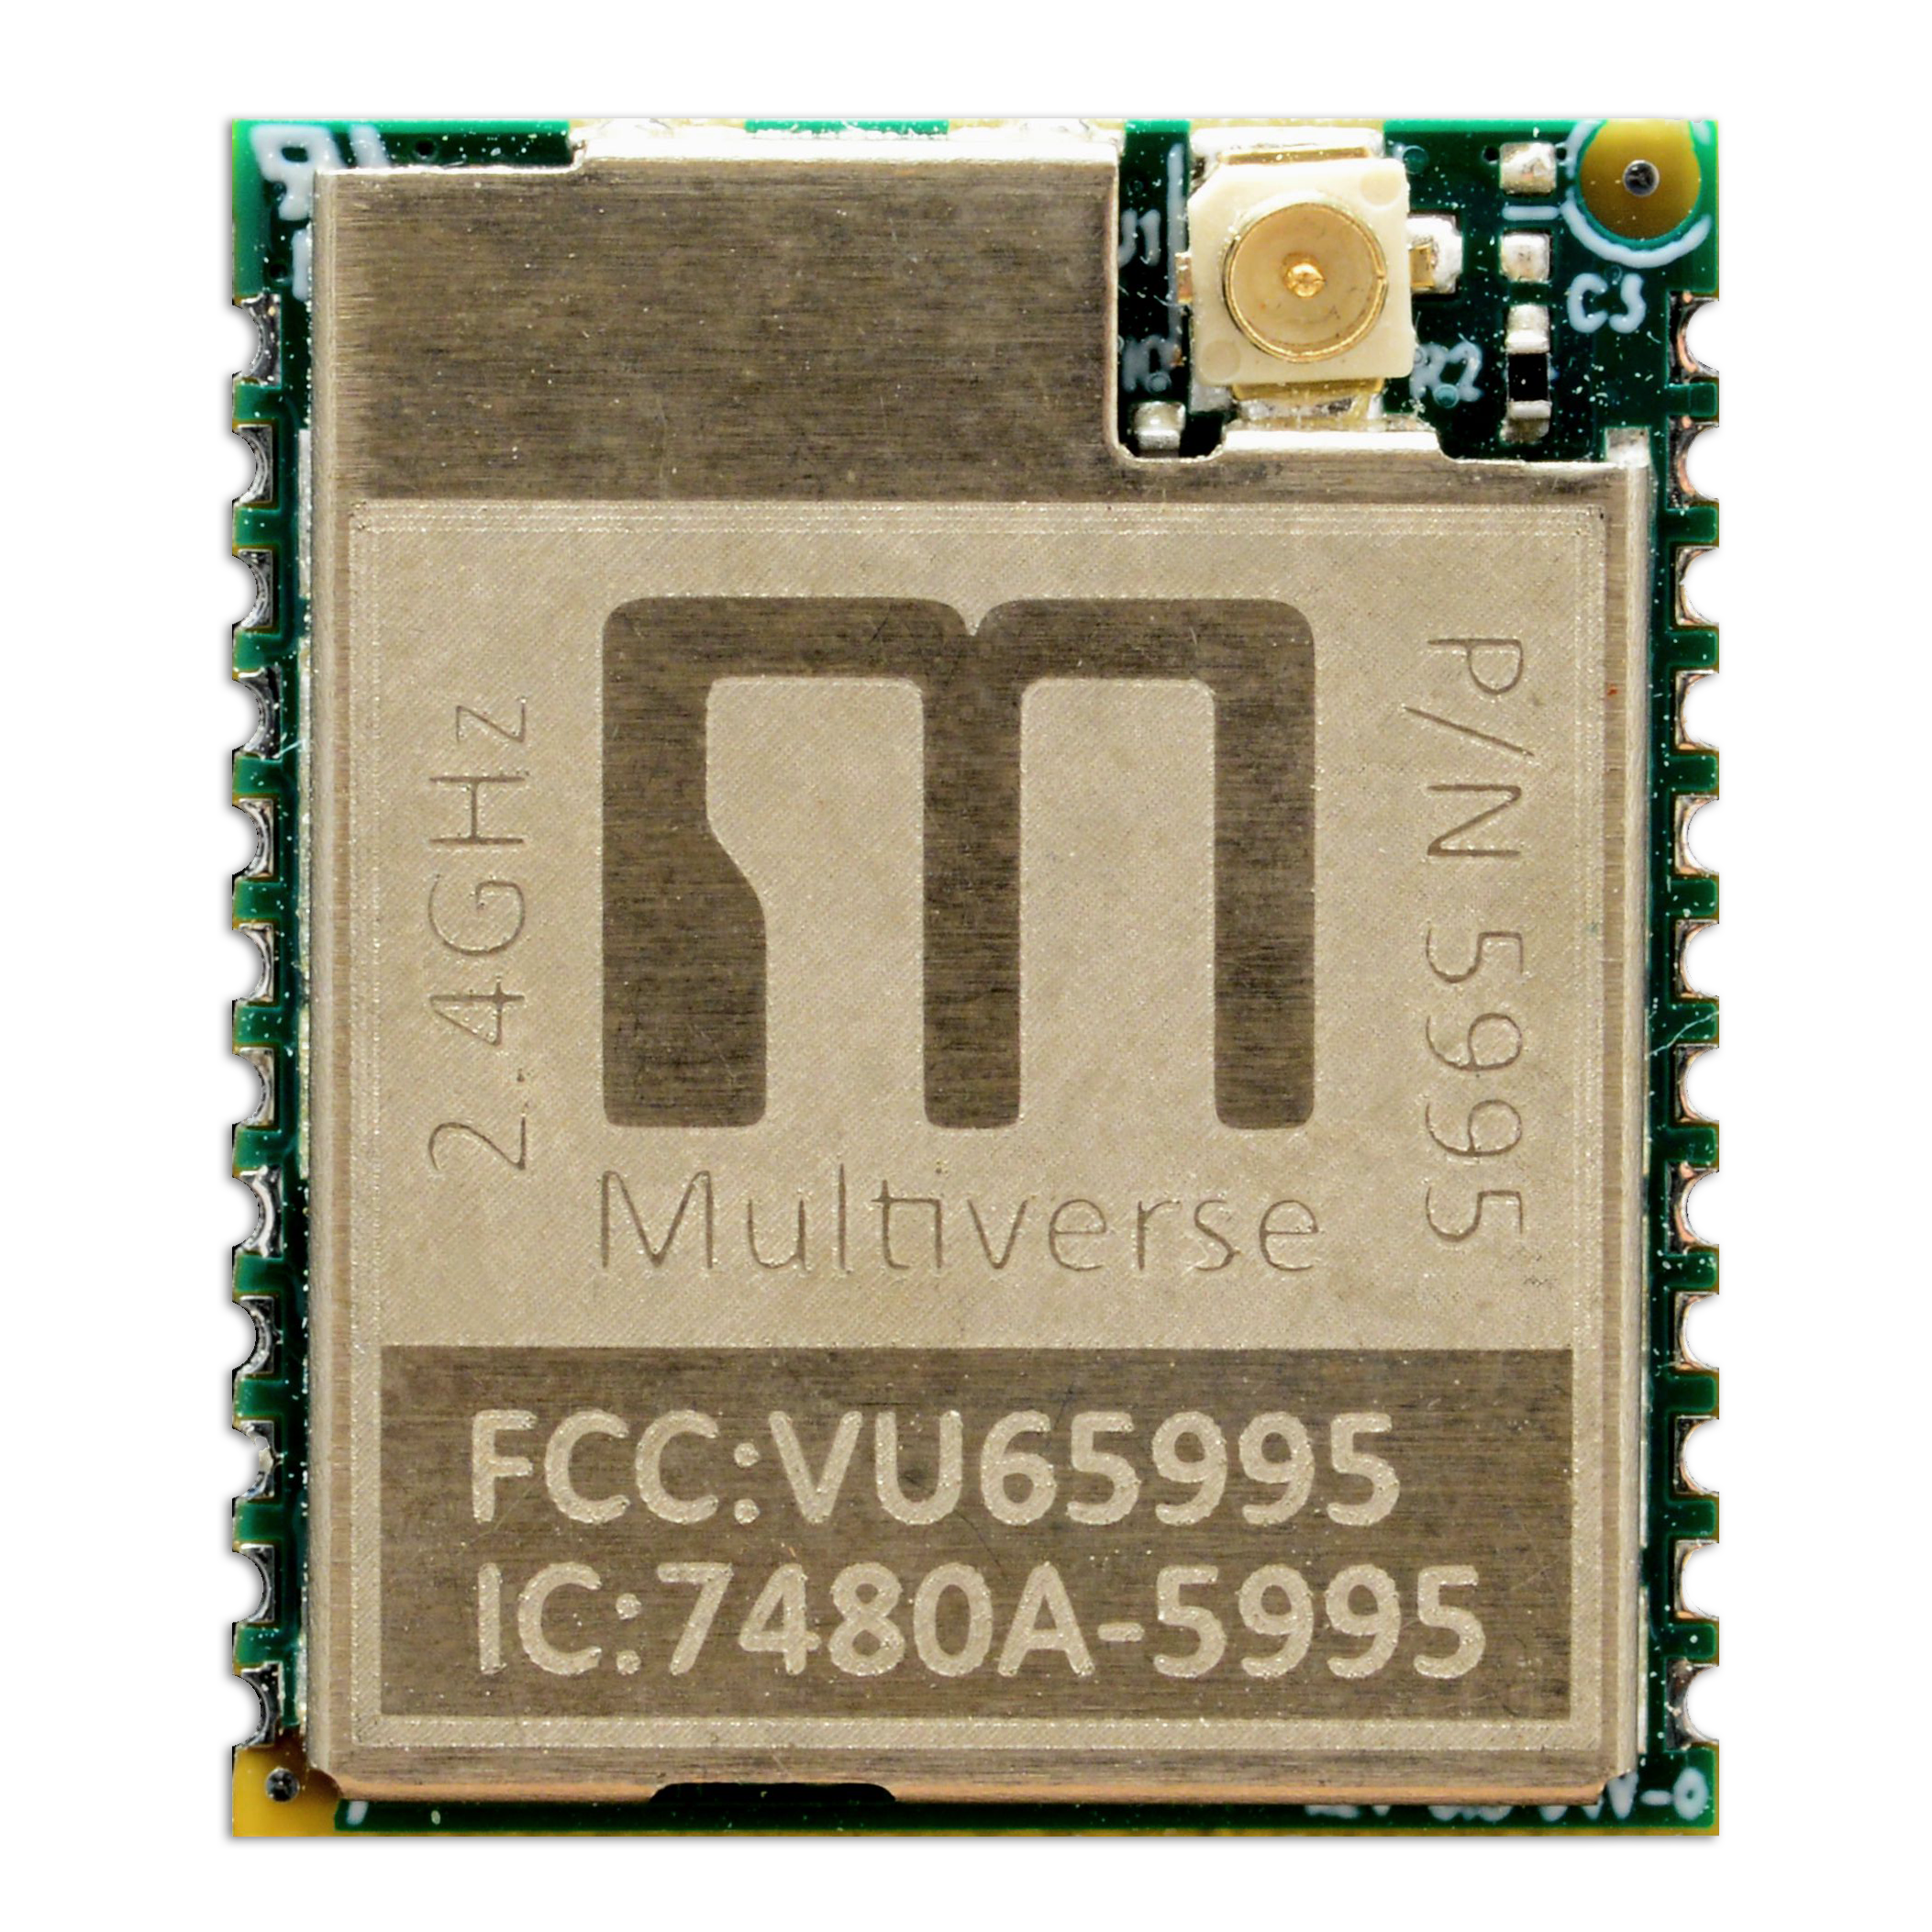 5995 Multiverse Module 2.4GHz